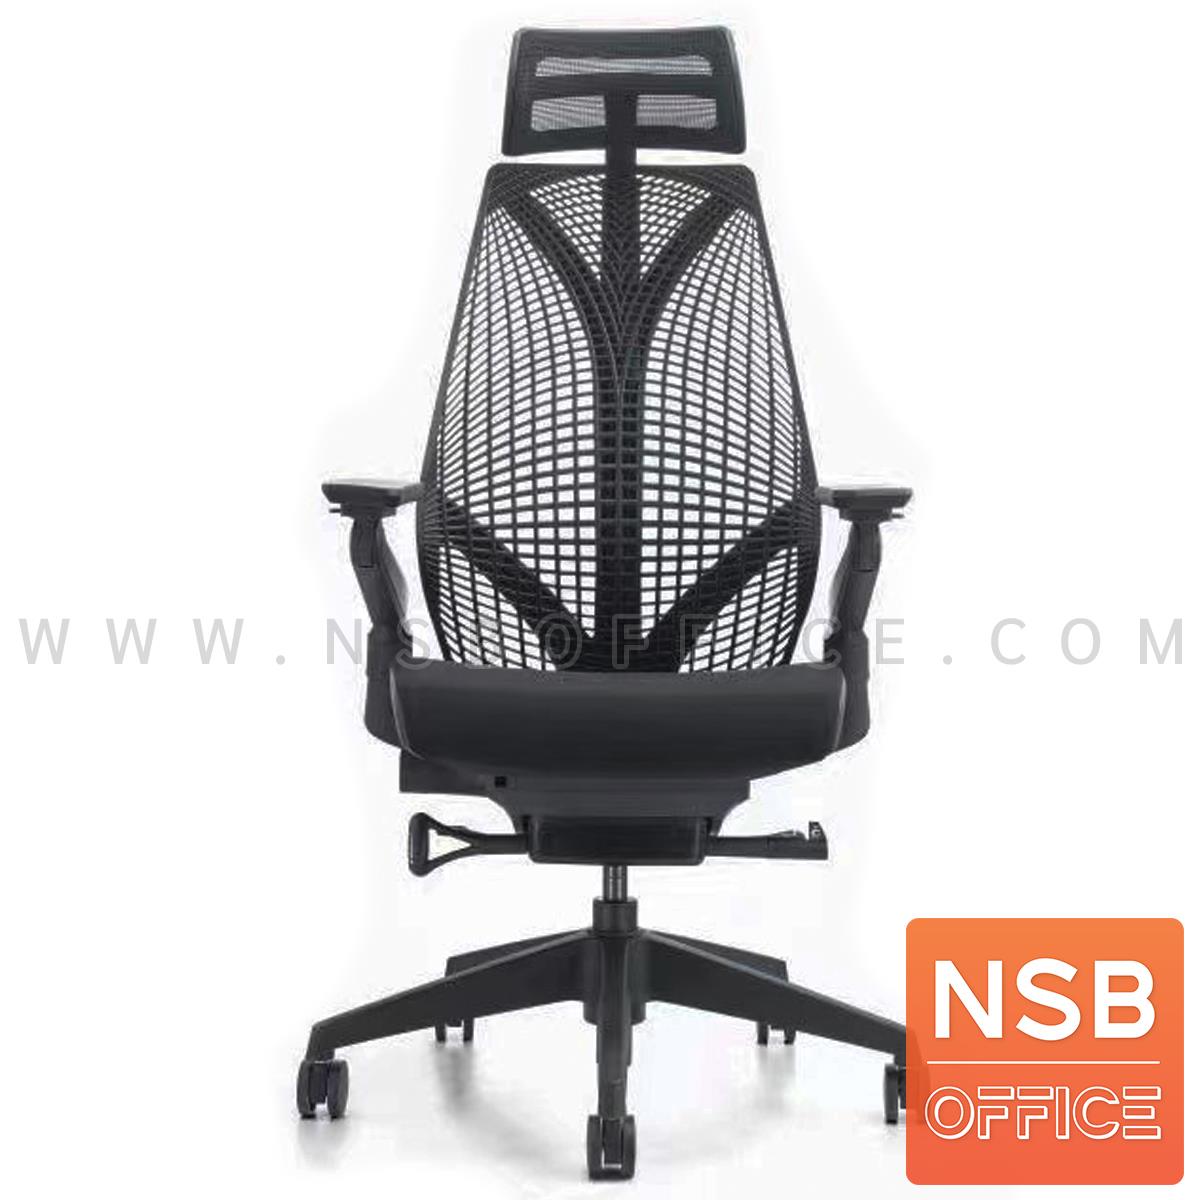 B28A145:เก้าอี้เพื่อสุขภาพ รุ่น Trevor (เทรเวอร์)  ขาพลาสติก ผลิตจากพลาสติกวิศวกรรมประสิทธิภาพสูง